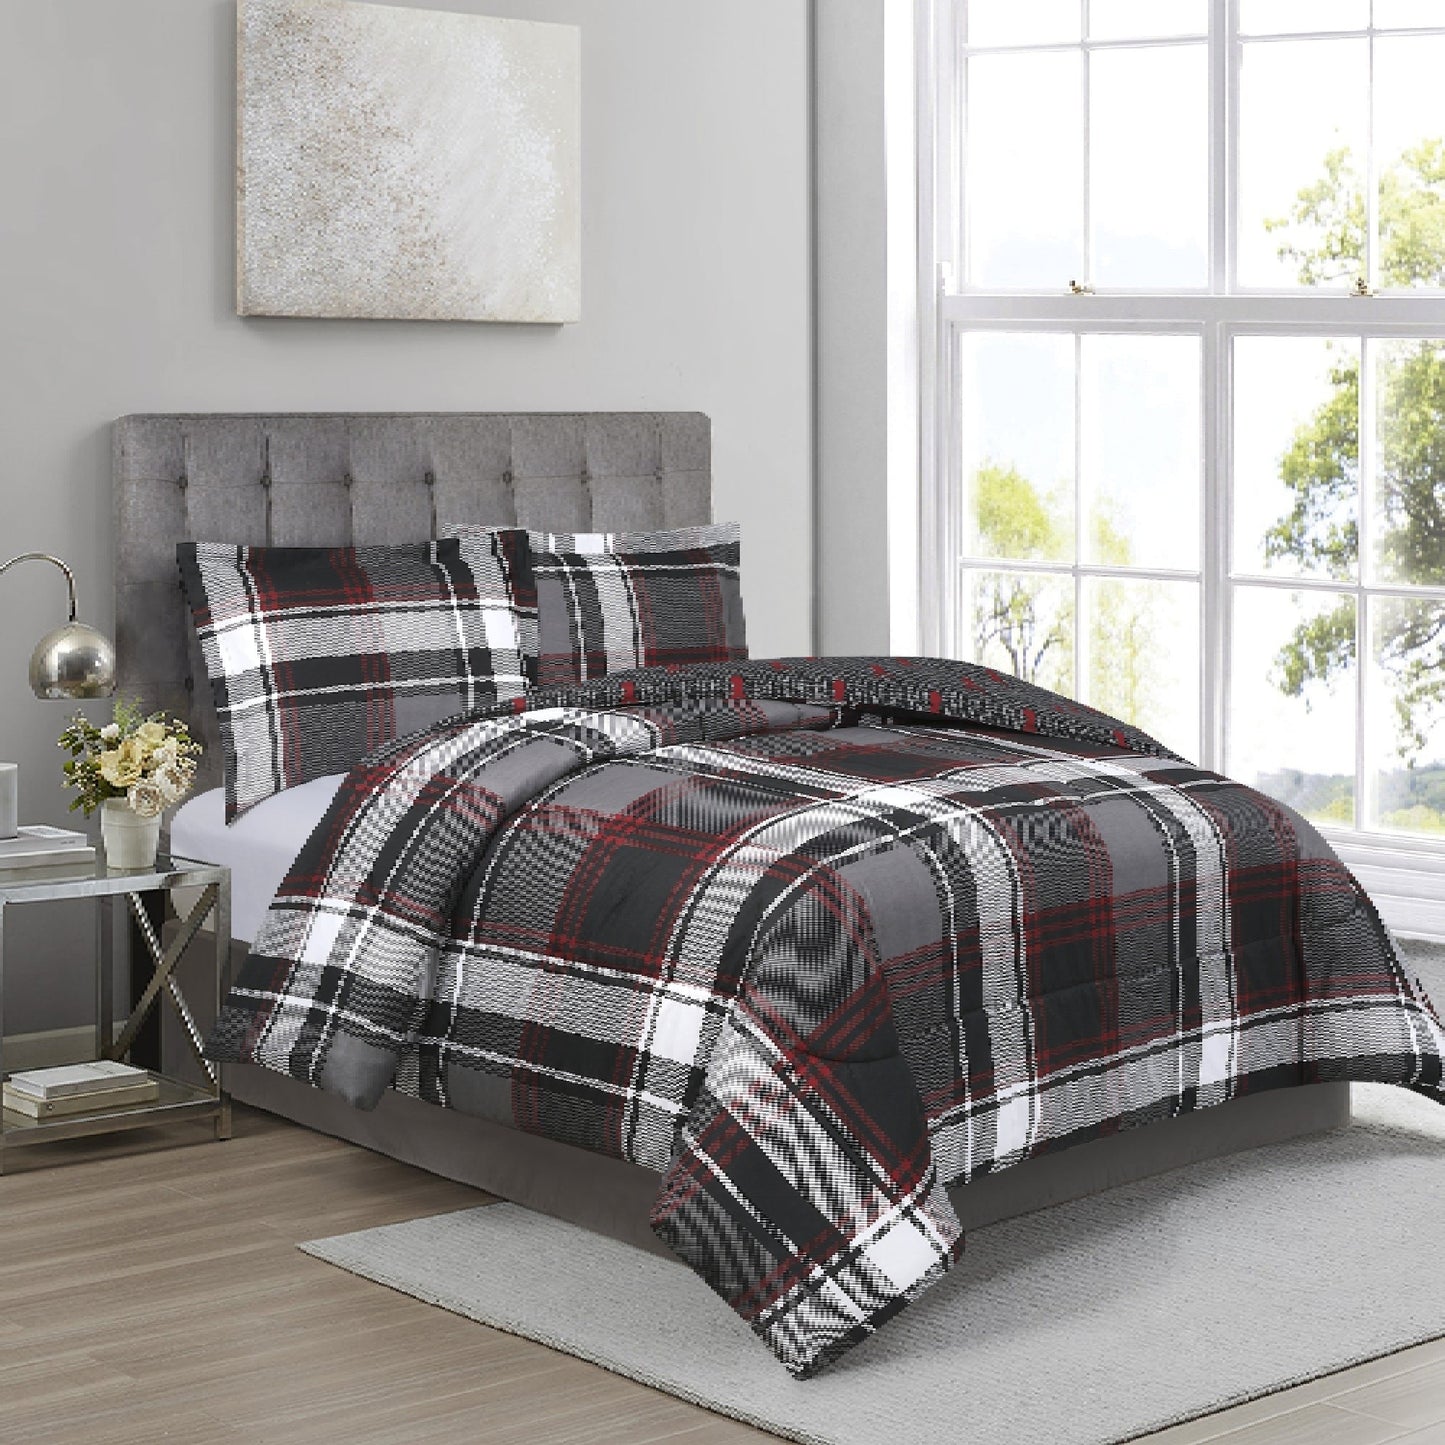 3 Pieces Liam Plaid Bedding Comforter Set, Microfiber - Black , White & Grey